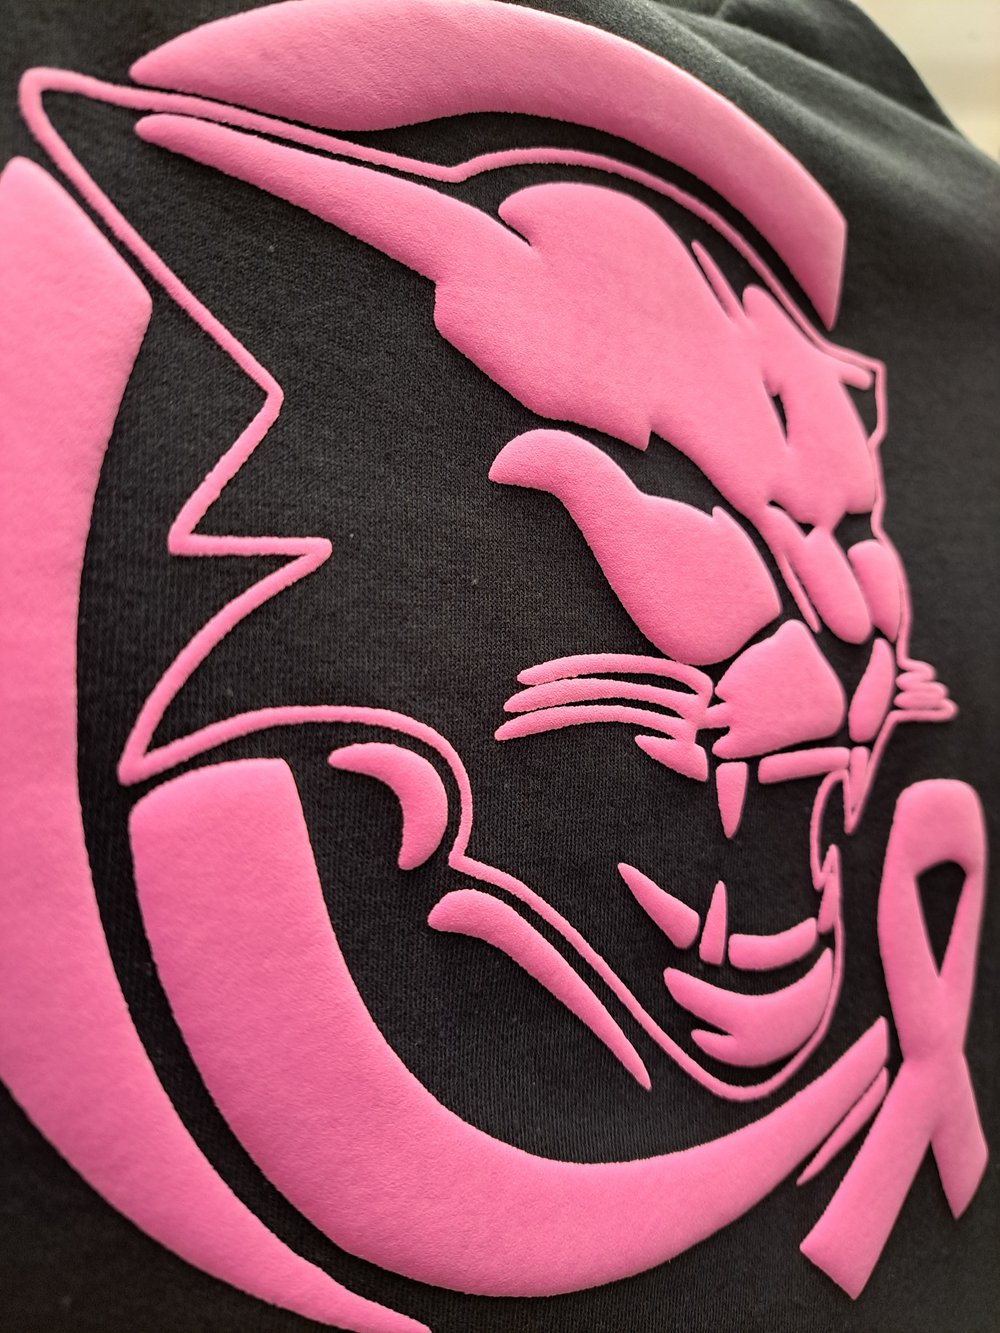 Charleroi Cougar Breast Cancer 3D Puff Print / Tee